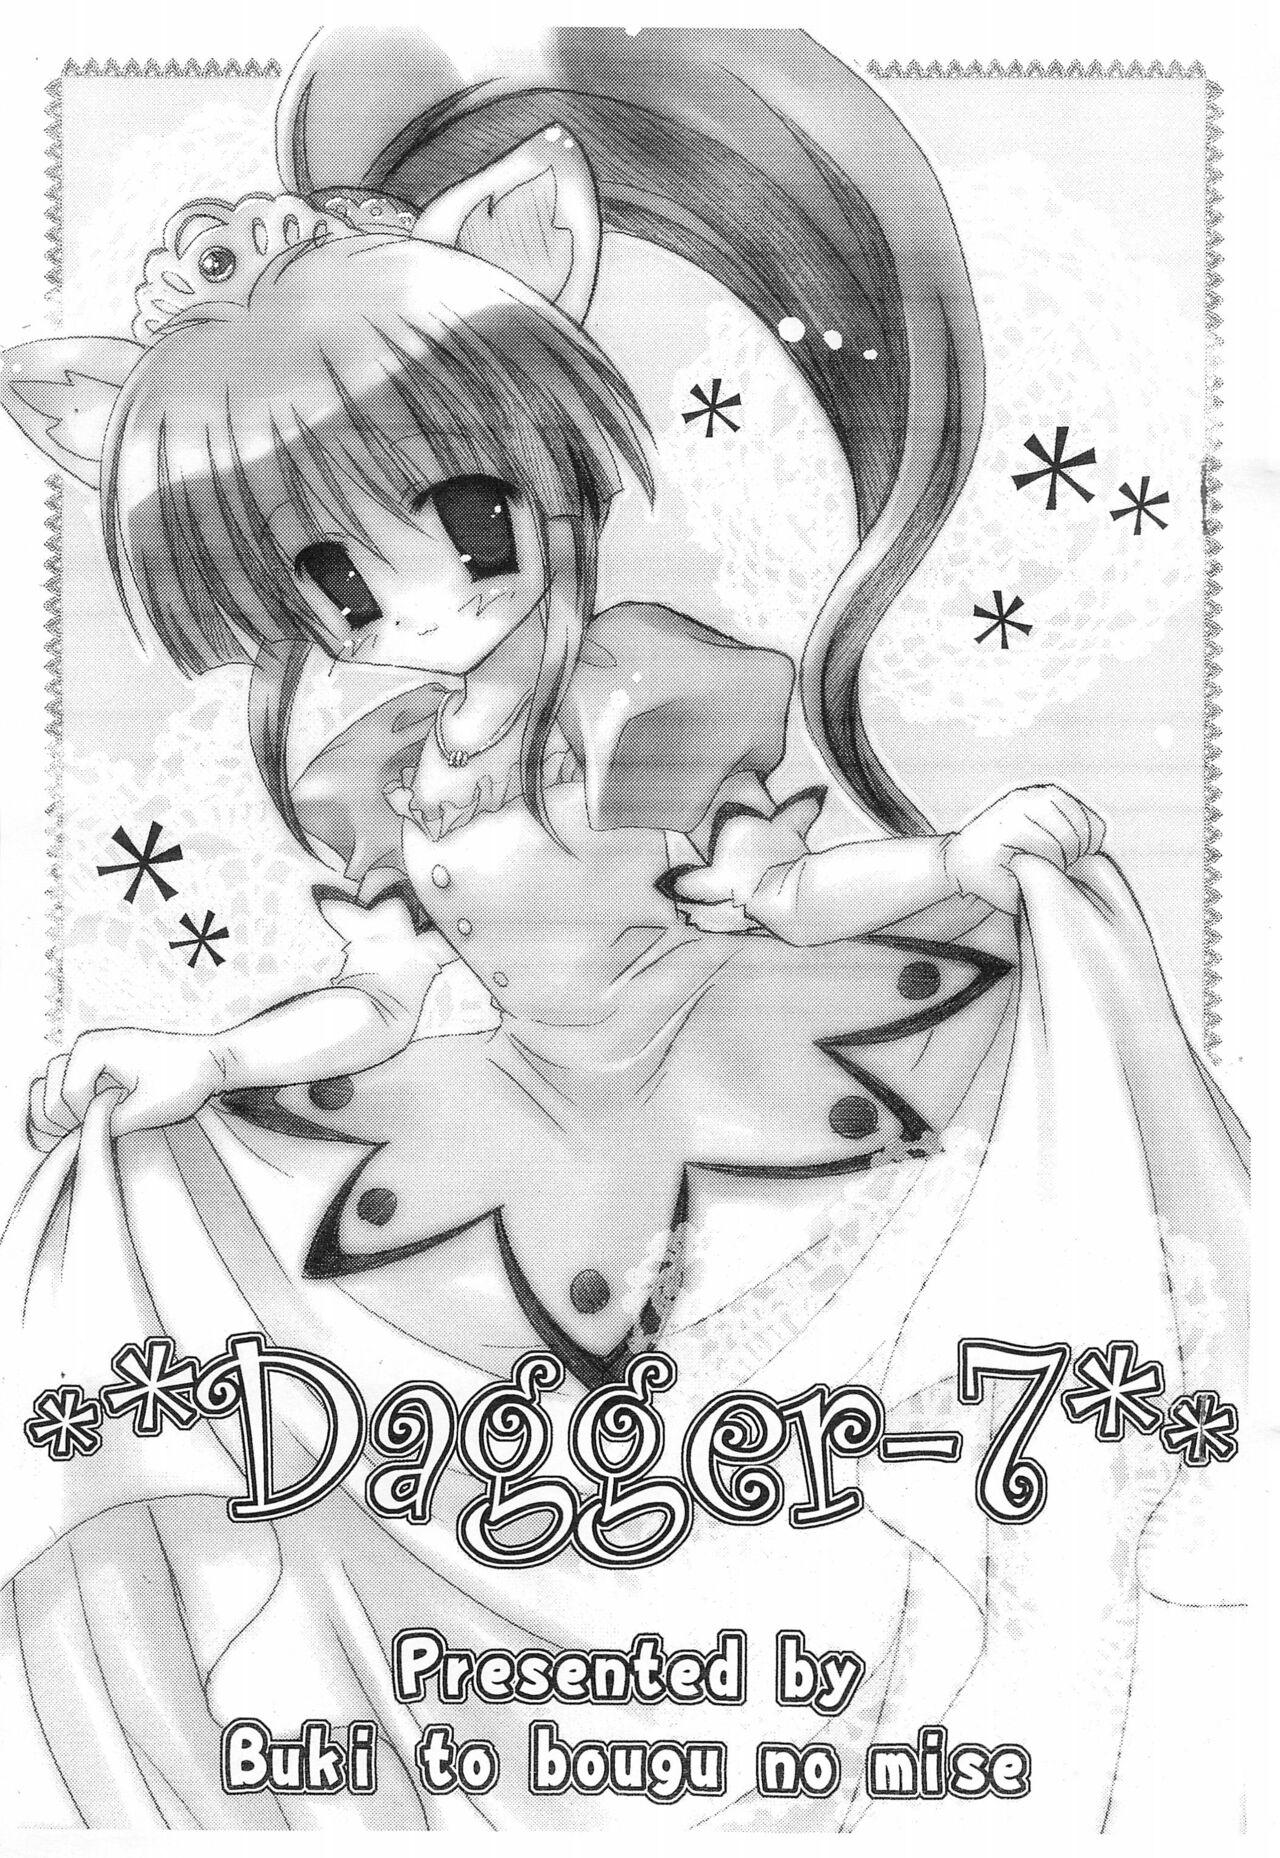 Dagger‐7 1